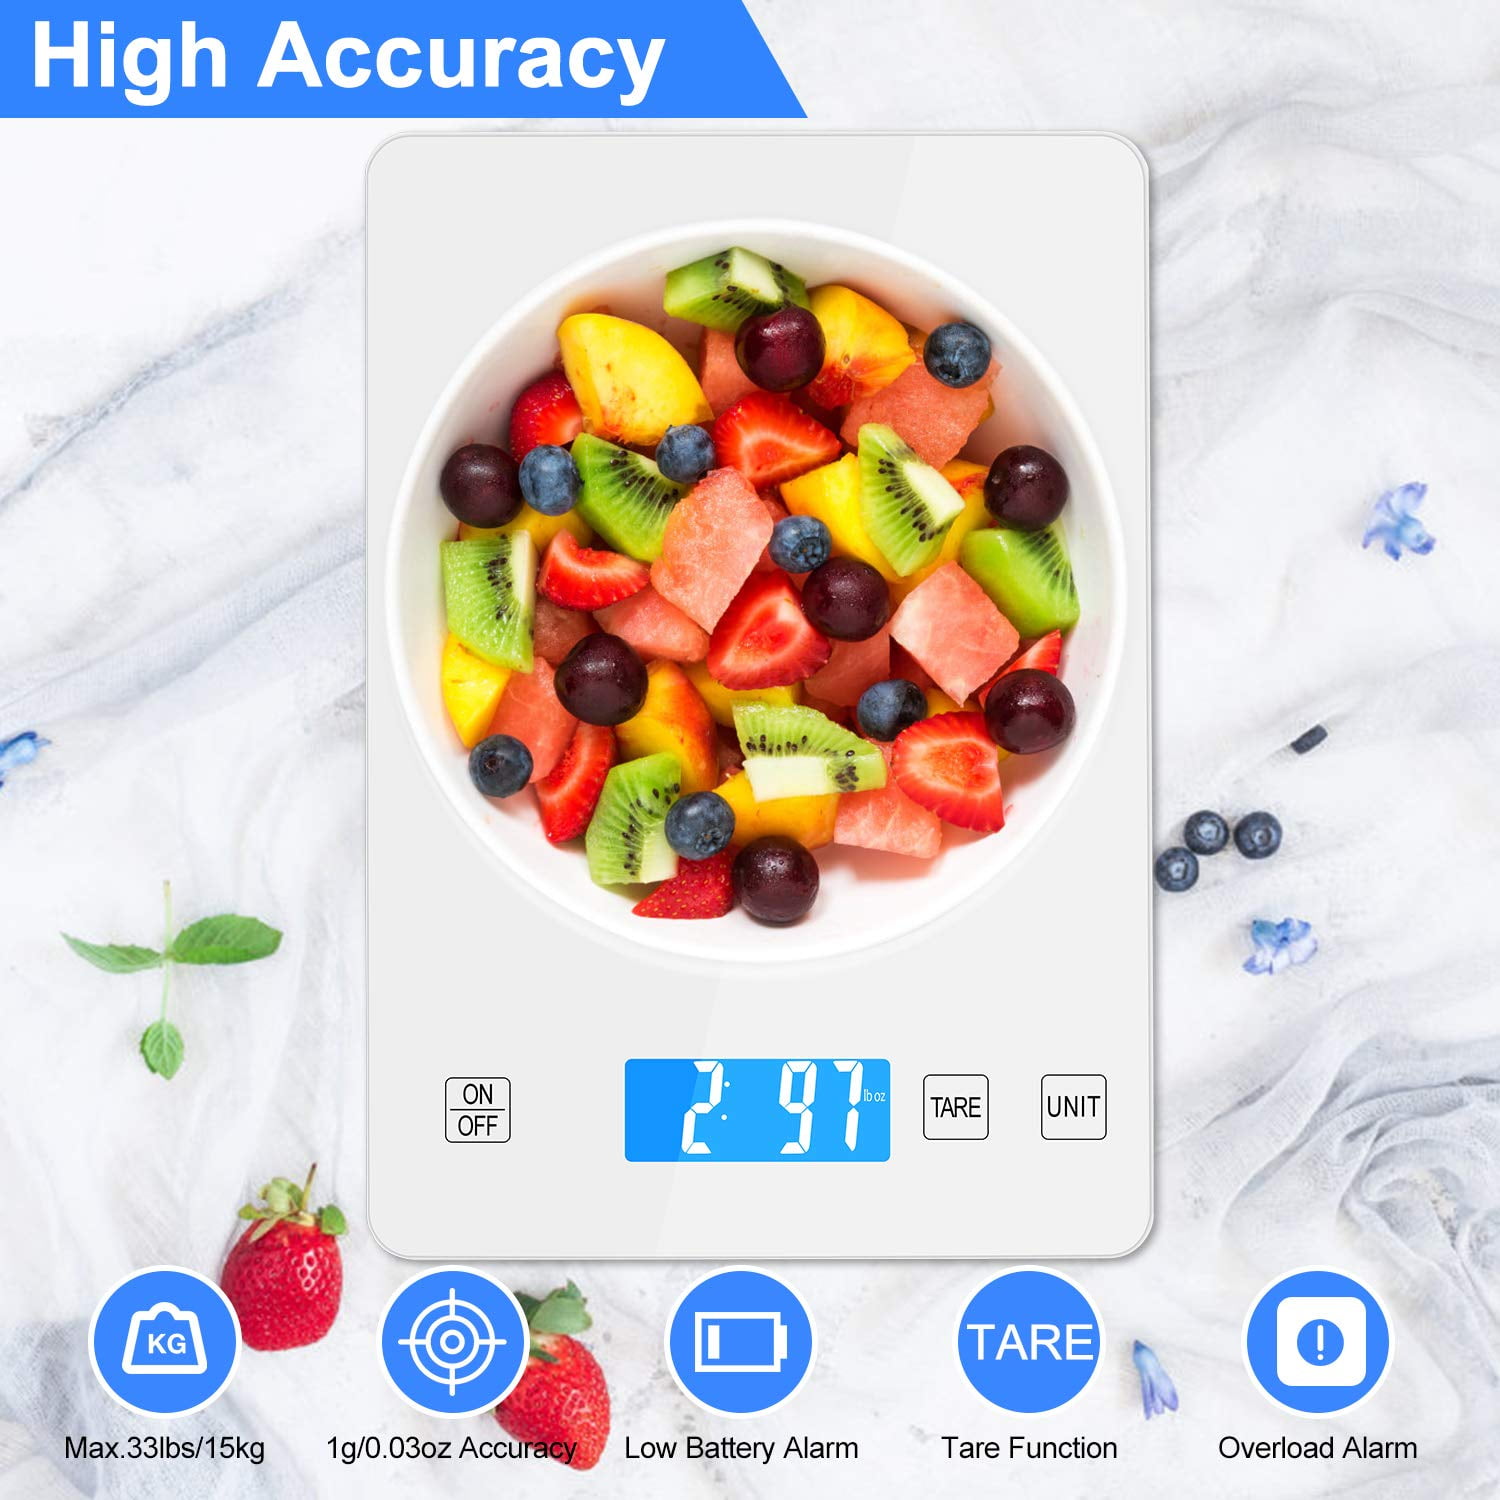 Food Network™ Precision Digital Kitchen Scale